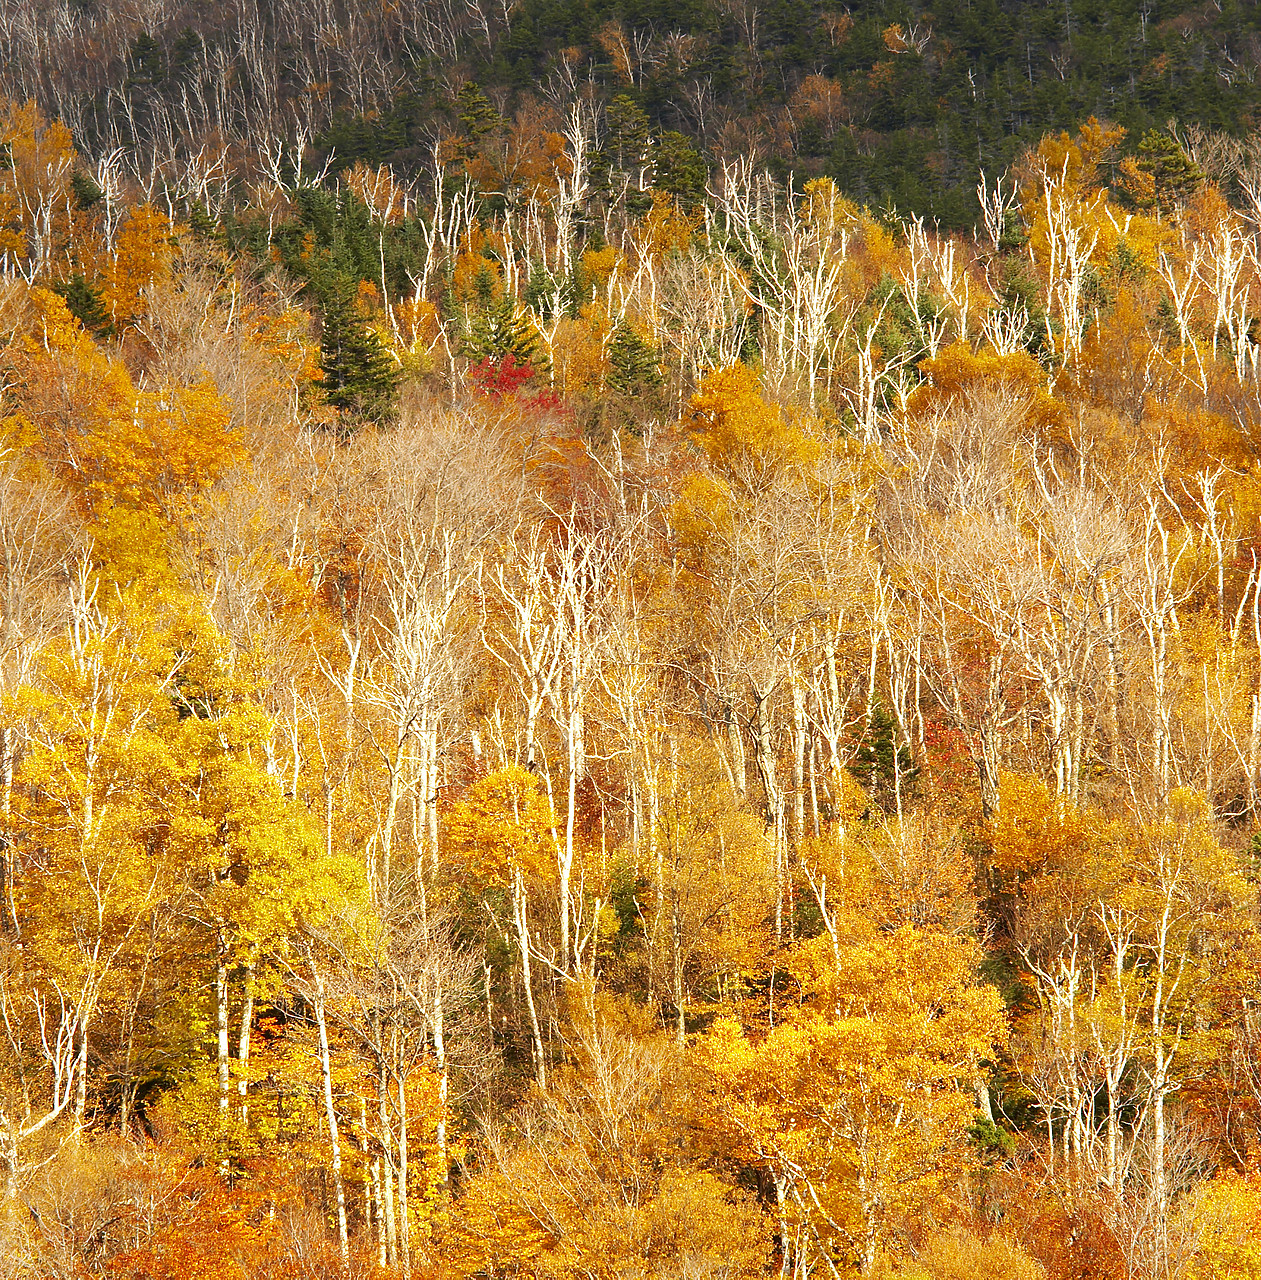 #080319-1 - Silver Birch Trees in Autumn, Pinkham Notch, New Hampshire, USA